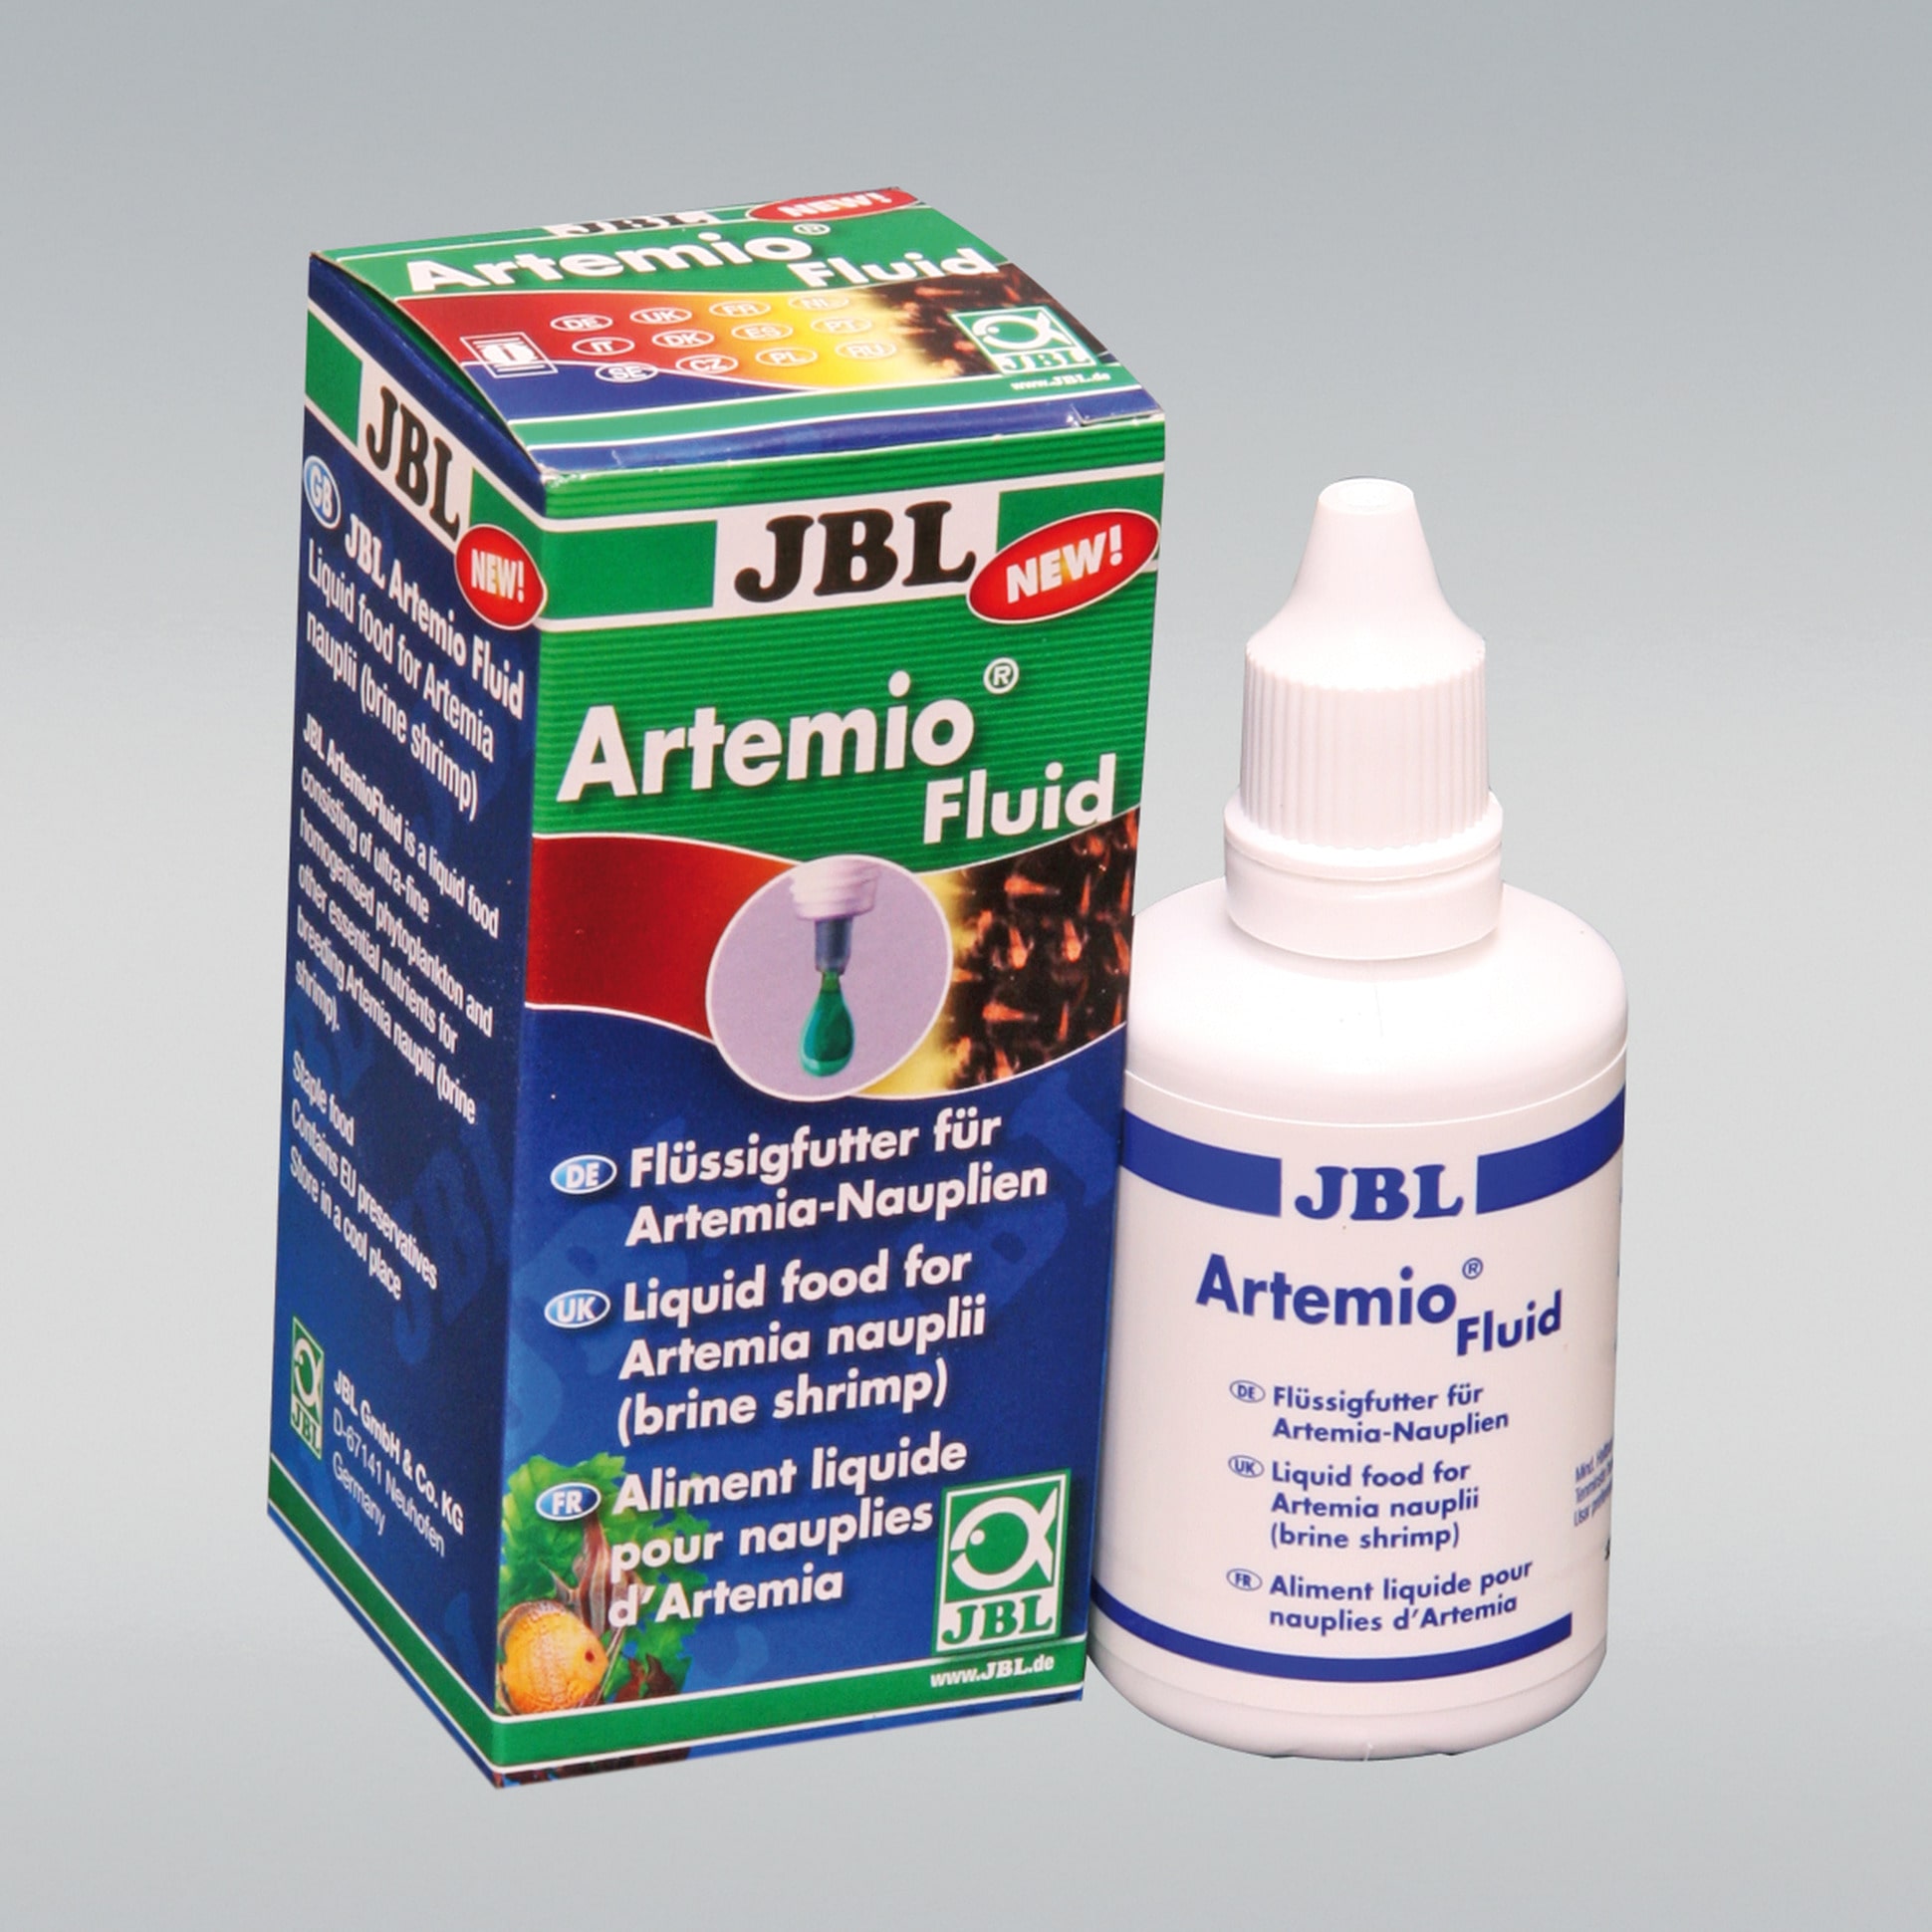 jbl-artemio-fluid-50-ml-1-min